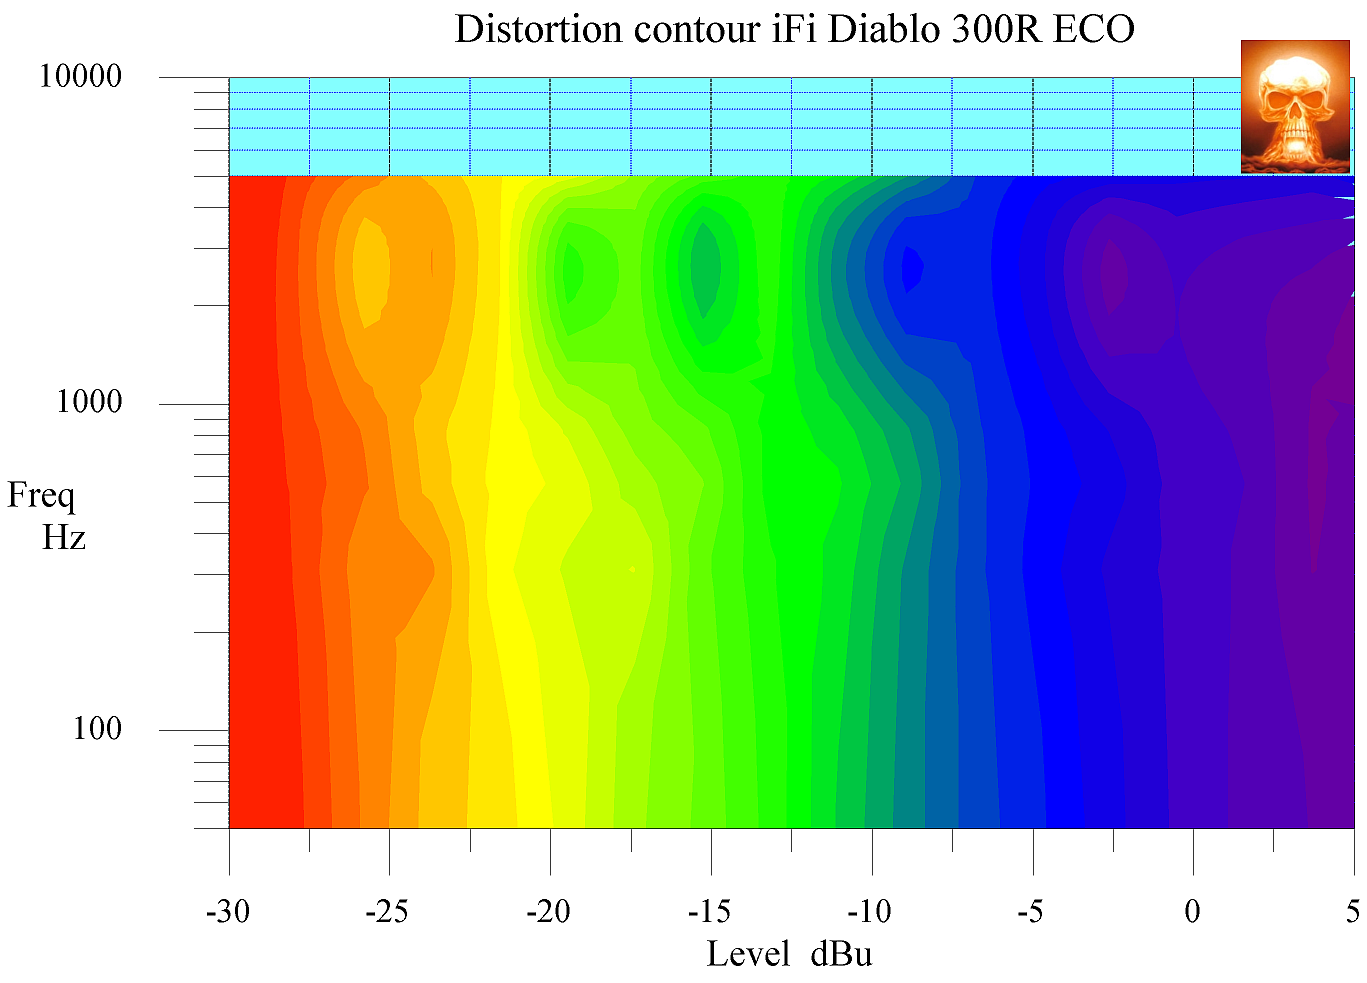 23 Distortion contour iFi Diablo 300R ECO 5 dBu max wm small.png